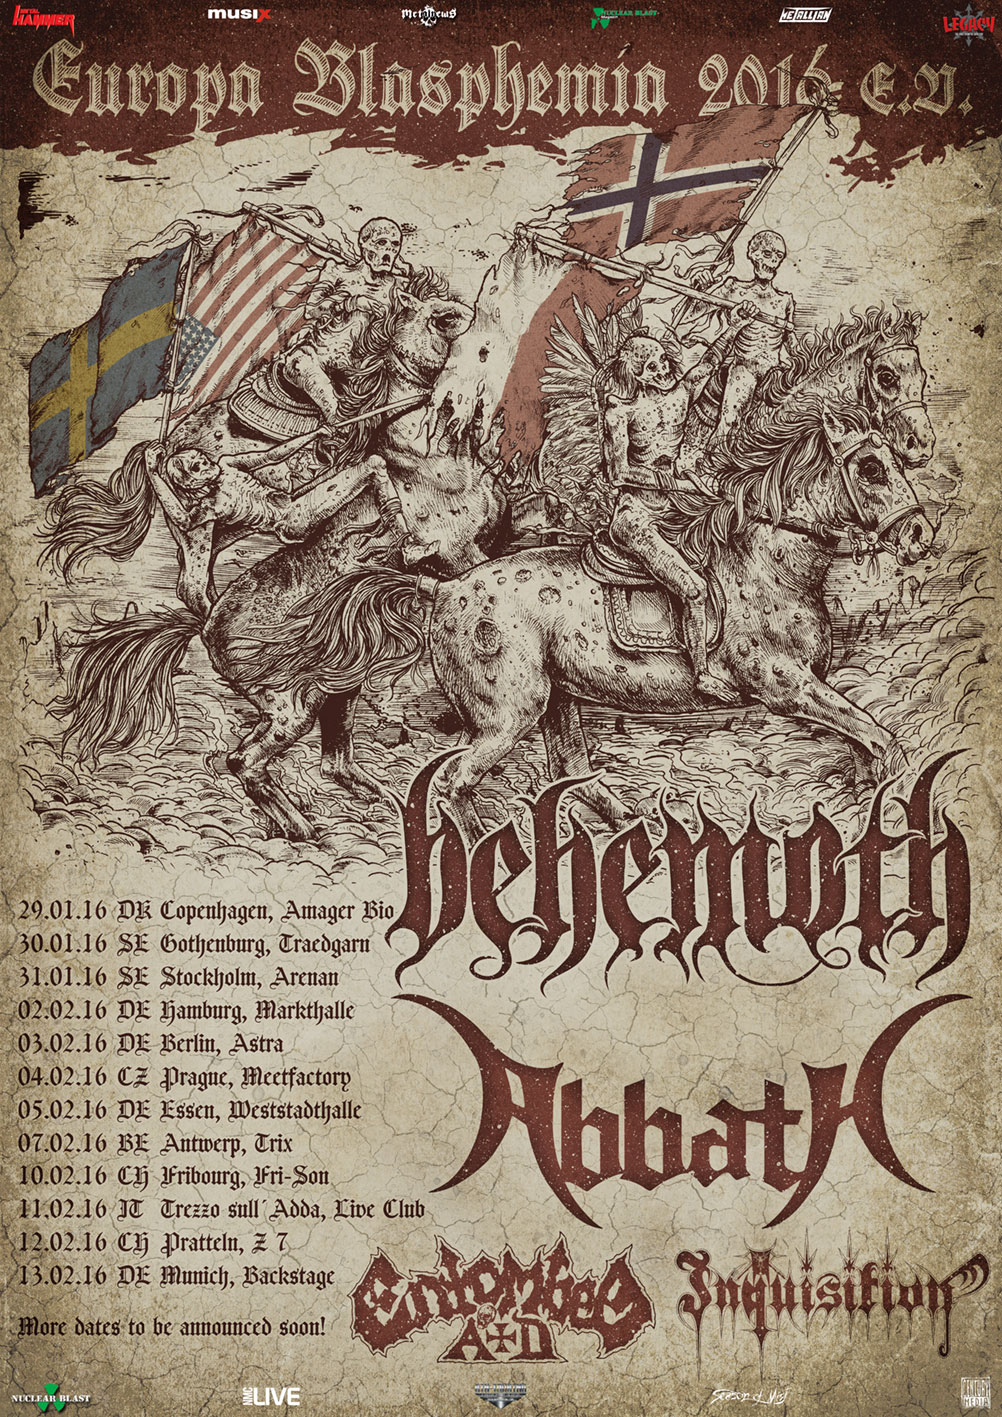 behemoth-tour2016_2-web.jpeg